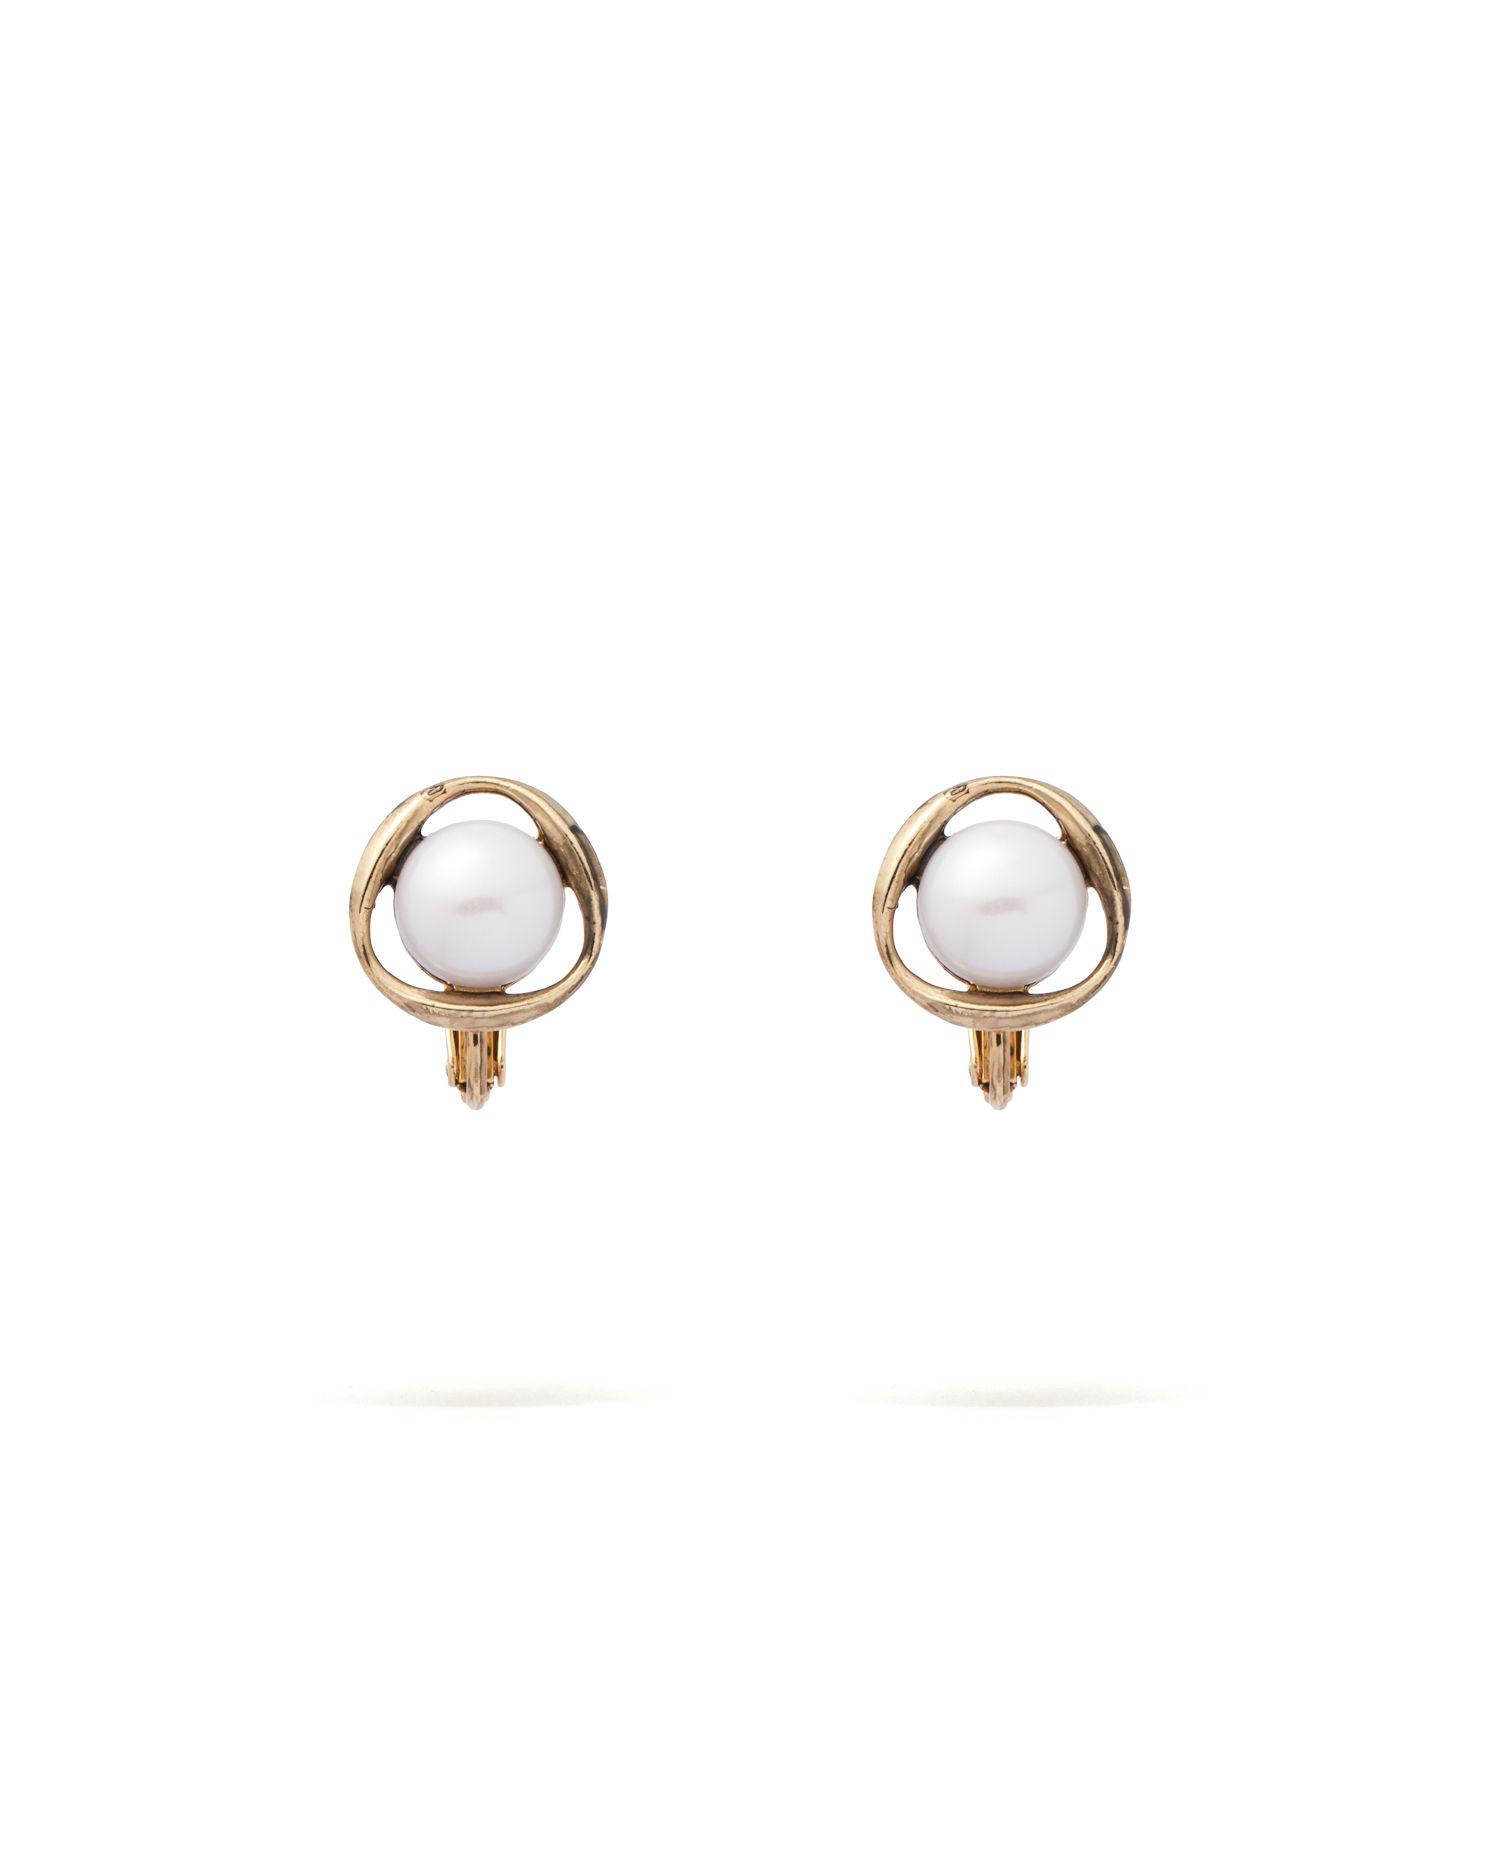 Gold-toned pearl earrings by BEAMS BOY